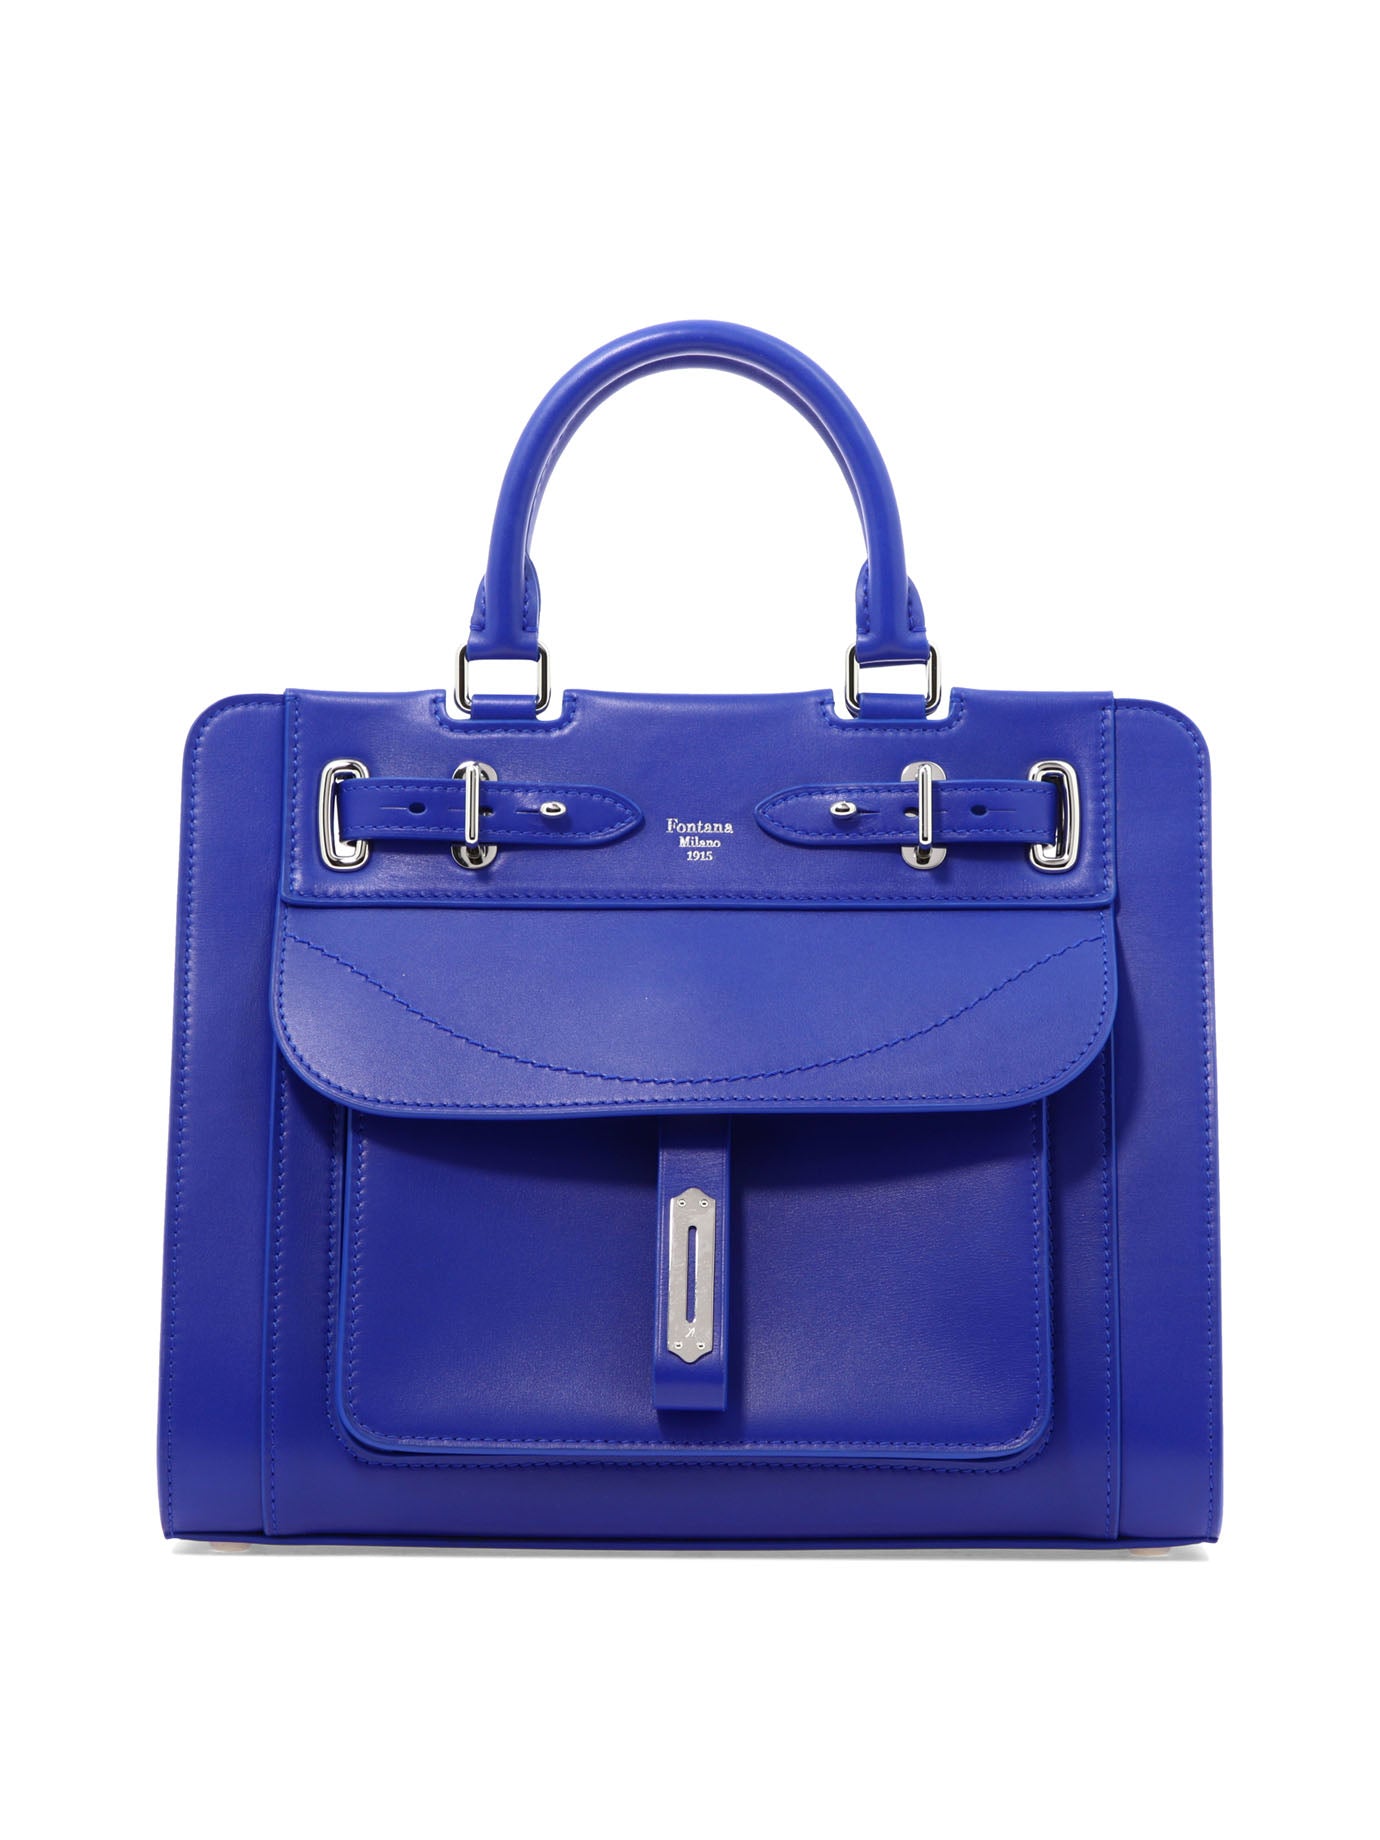 Shop Fontana Milano 1915 Blue Leather Handbag For Women With Zipper Closure And Open Pockets